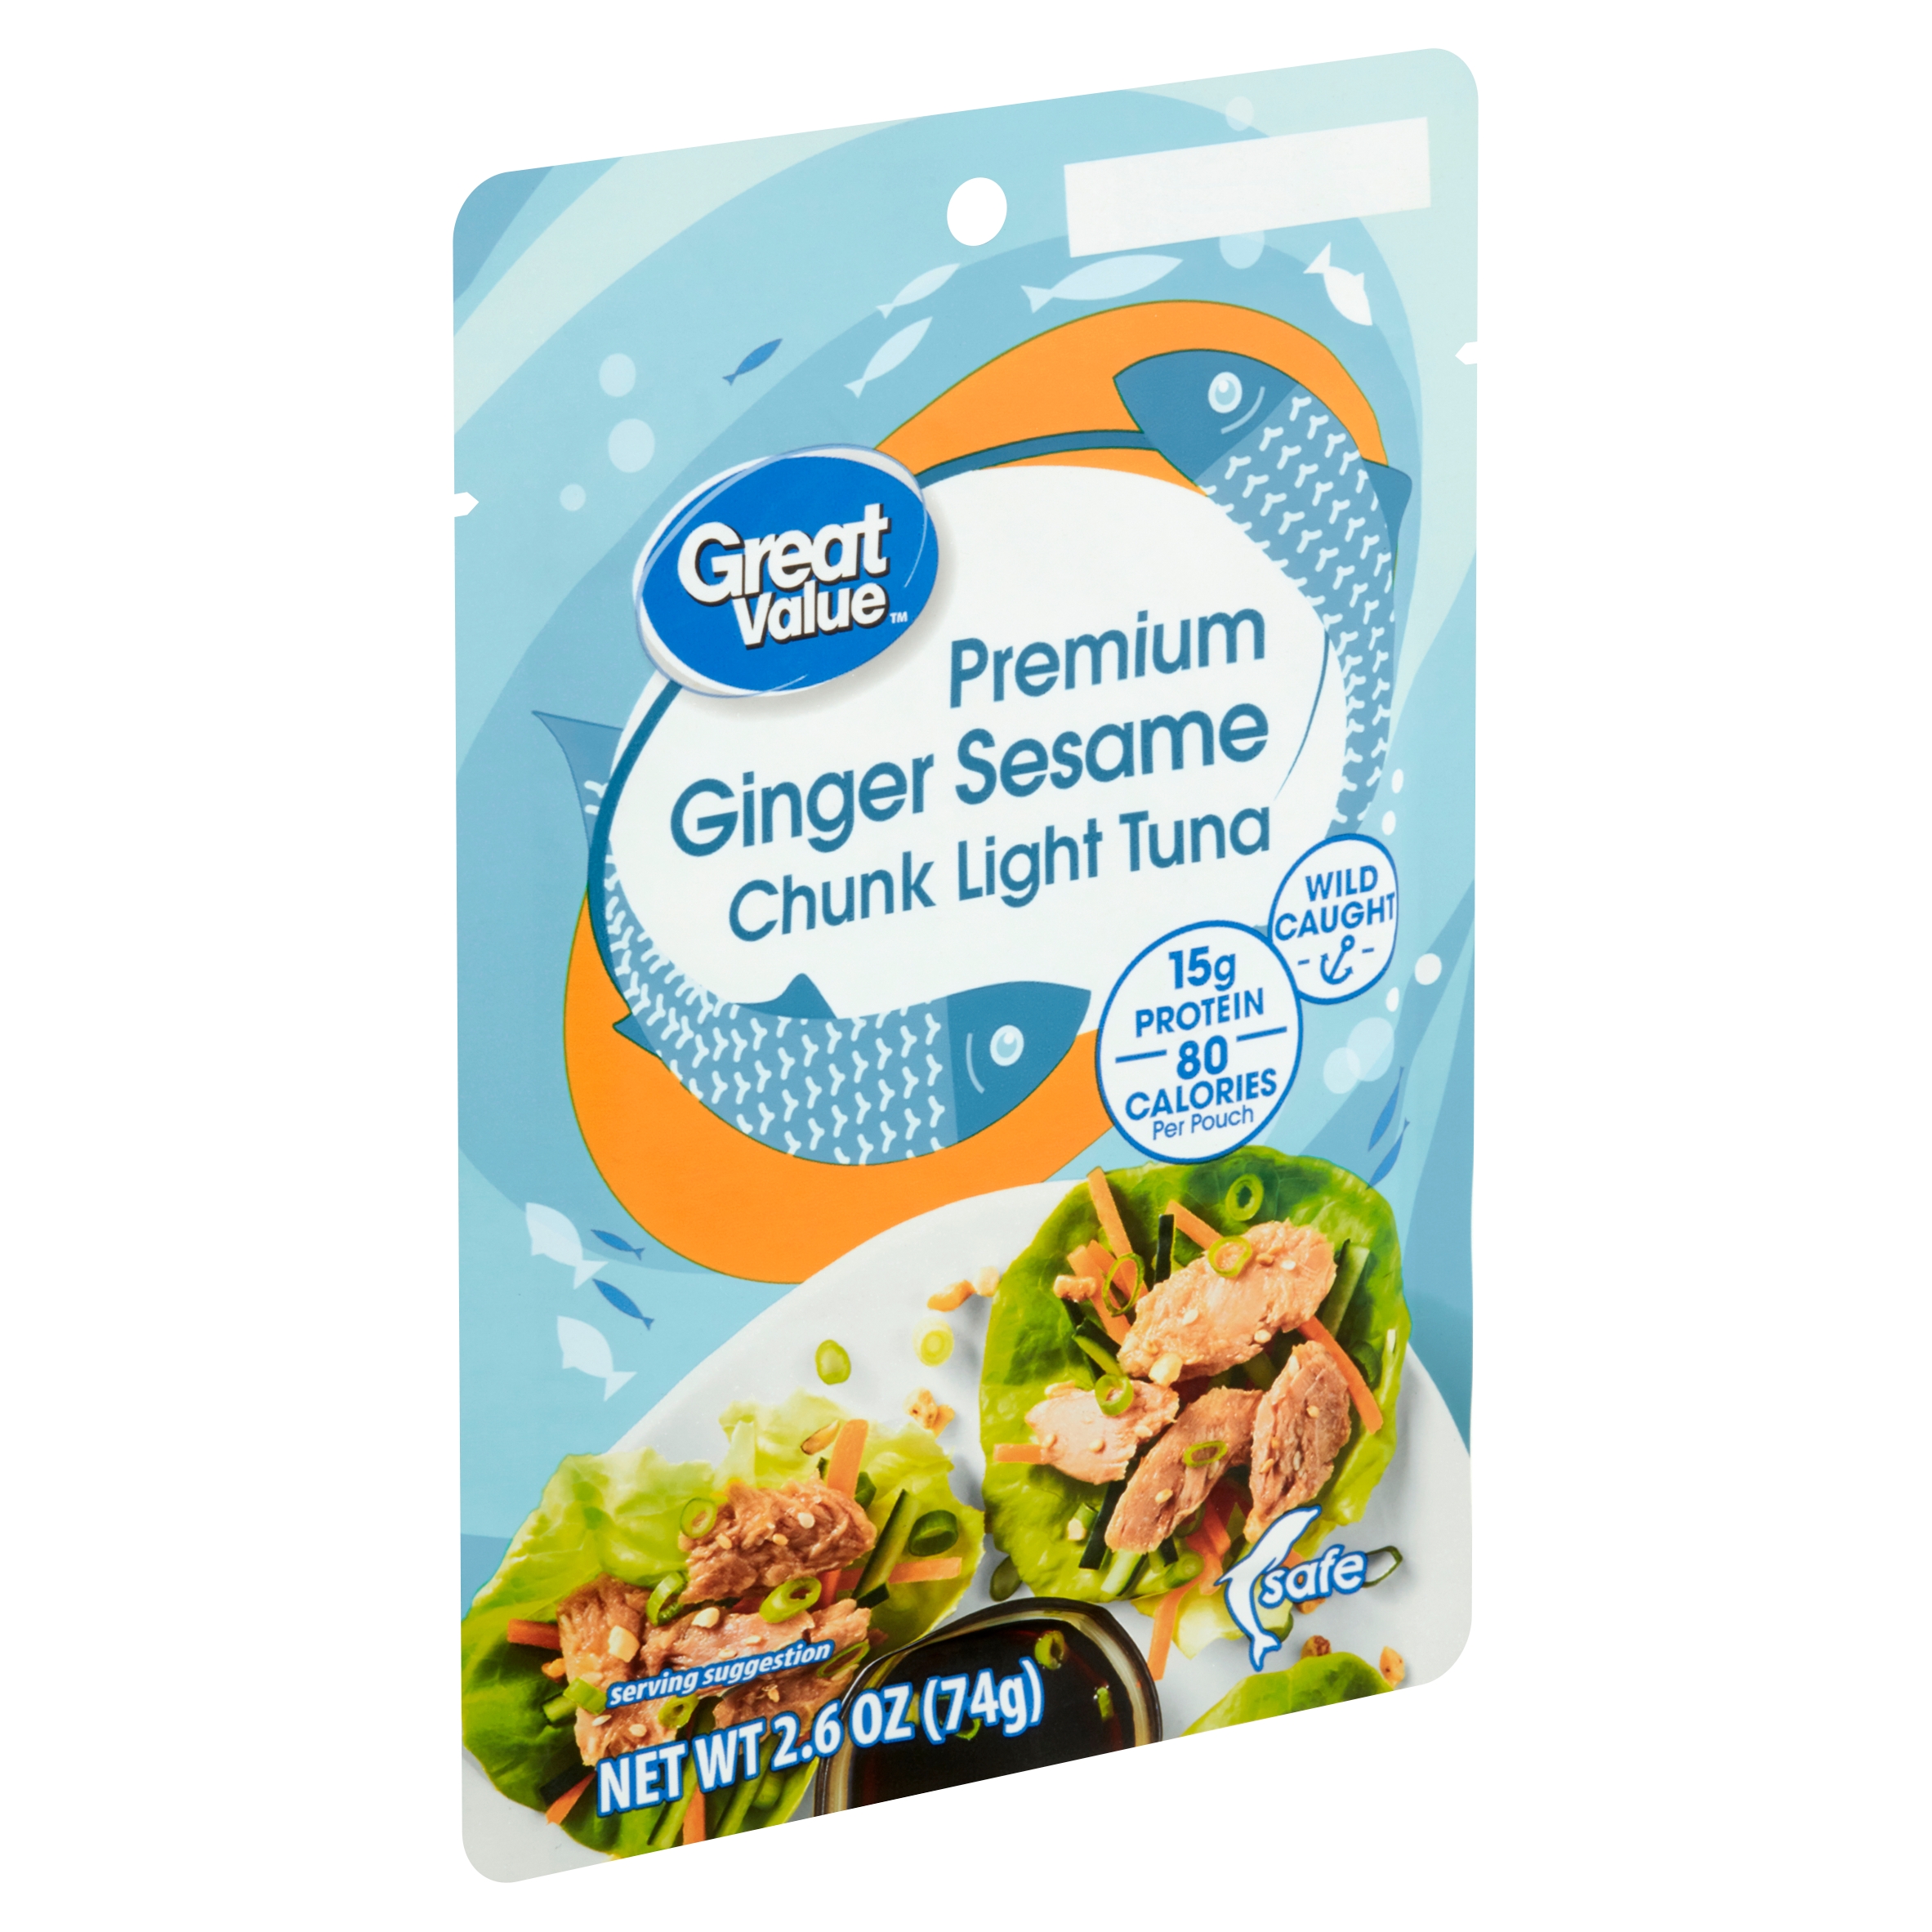 Great Value Premium Ginger Sesame Chunk Light Tuna, 2.6 Oz